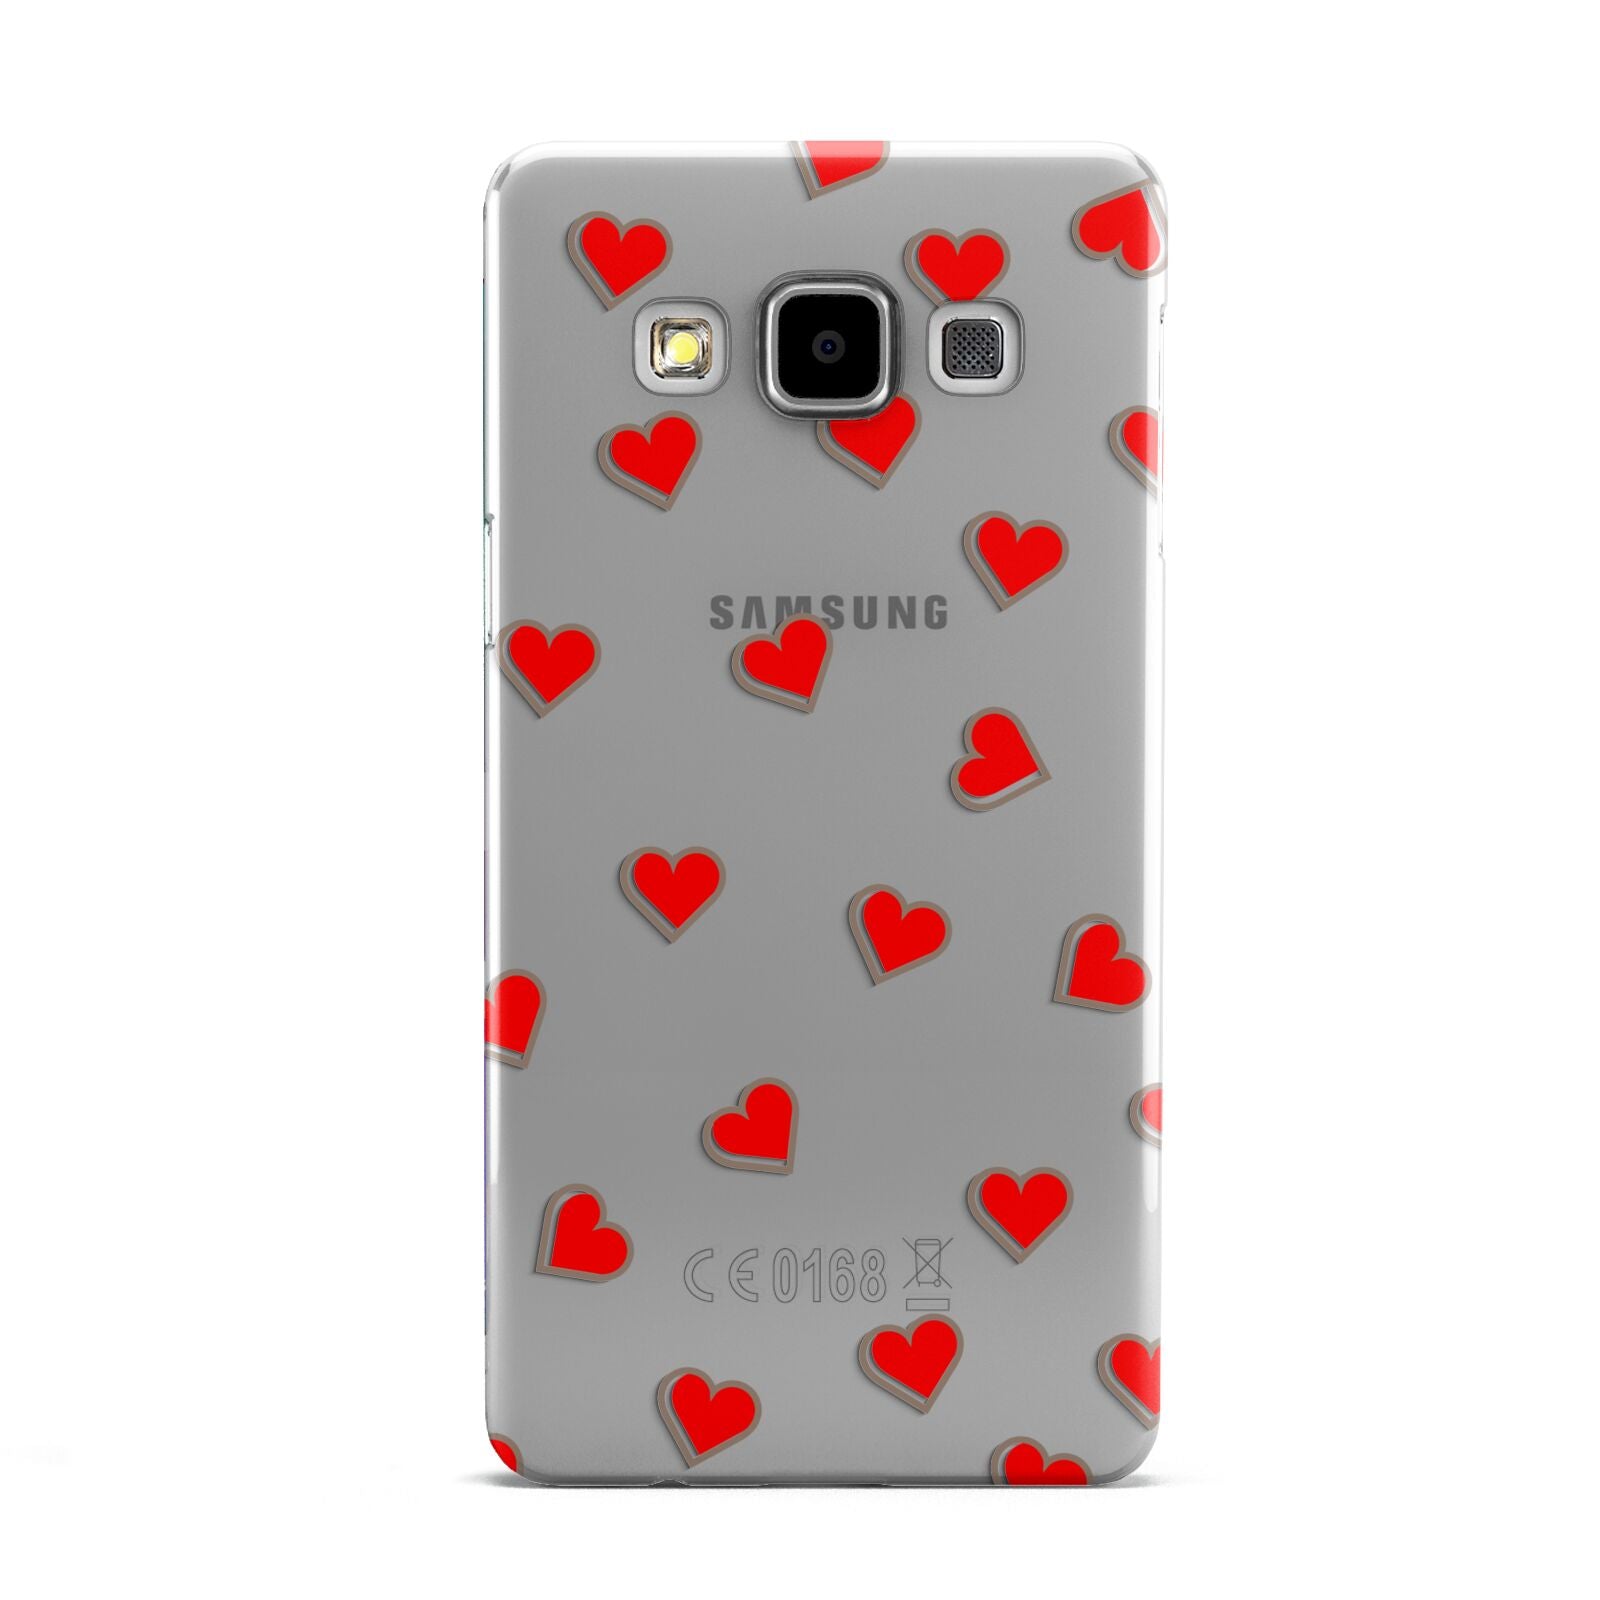 Cute Red Hearts Samsung Galaxy A5 Case